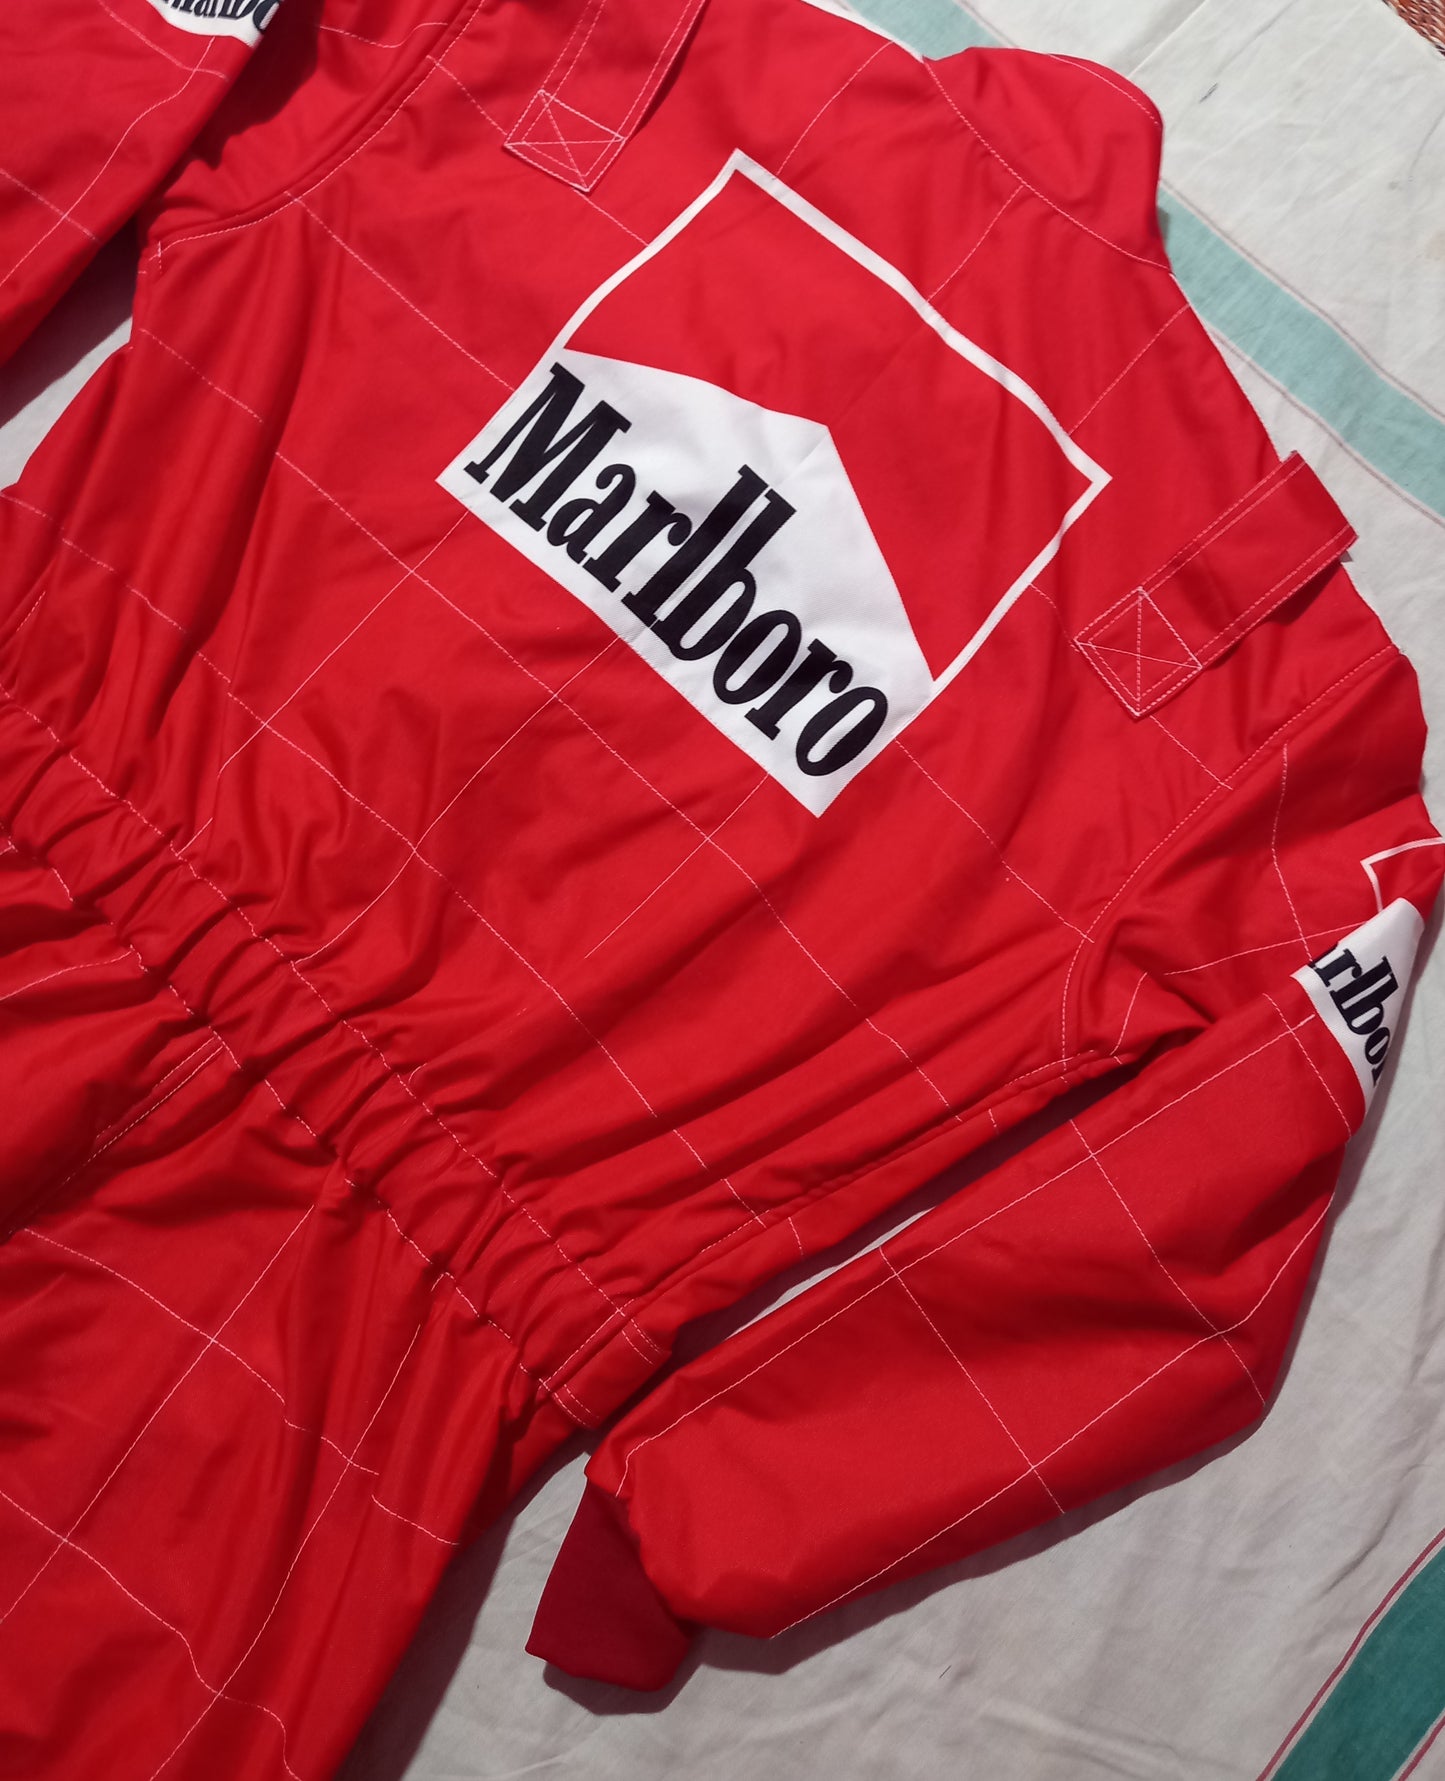 Nigel Mansell Marlboro 1990 suit f1 race suit